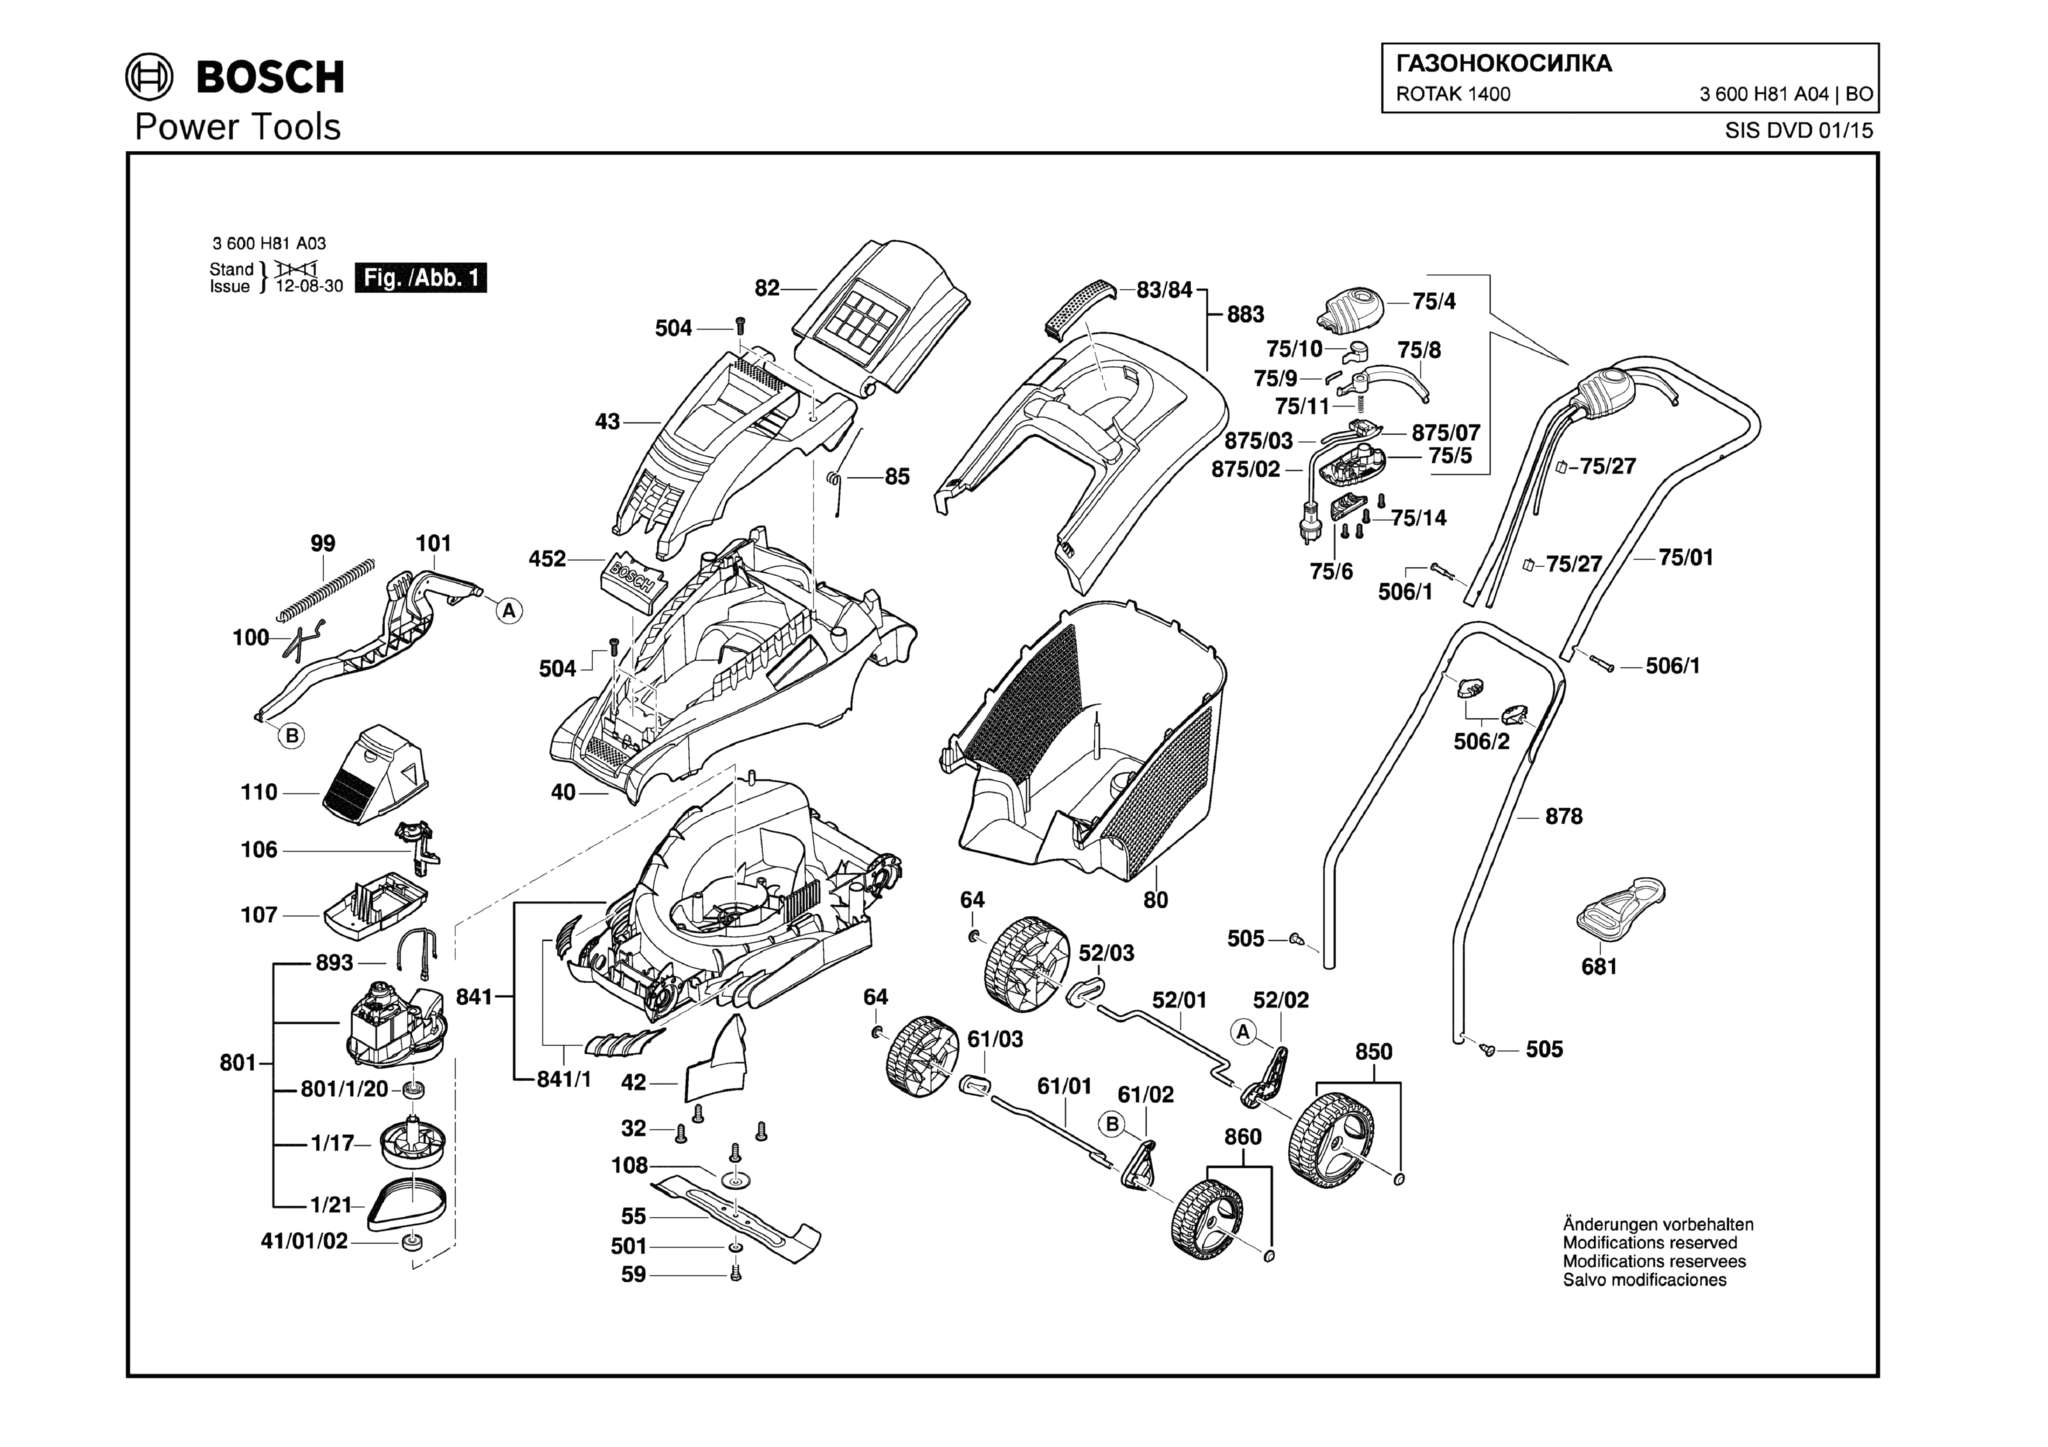 Запчасти, схема и деталировка Bosch ROTAK 1400 (ТИП 3600H81A04)